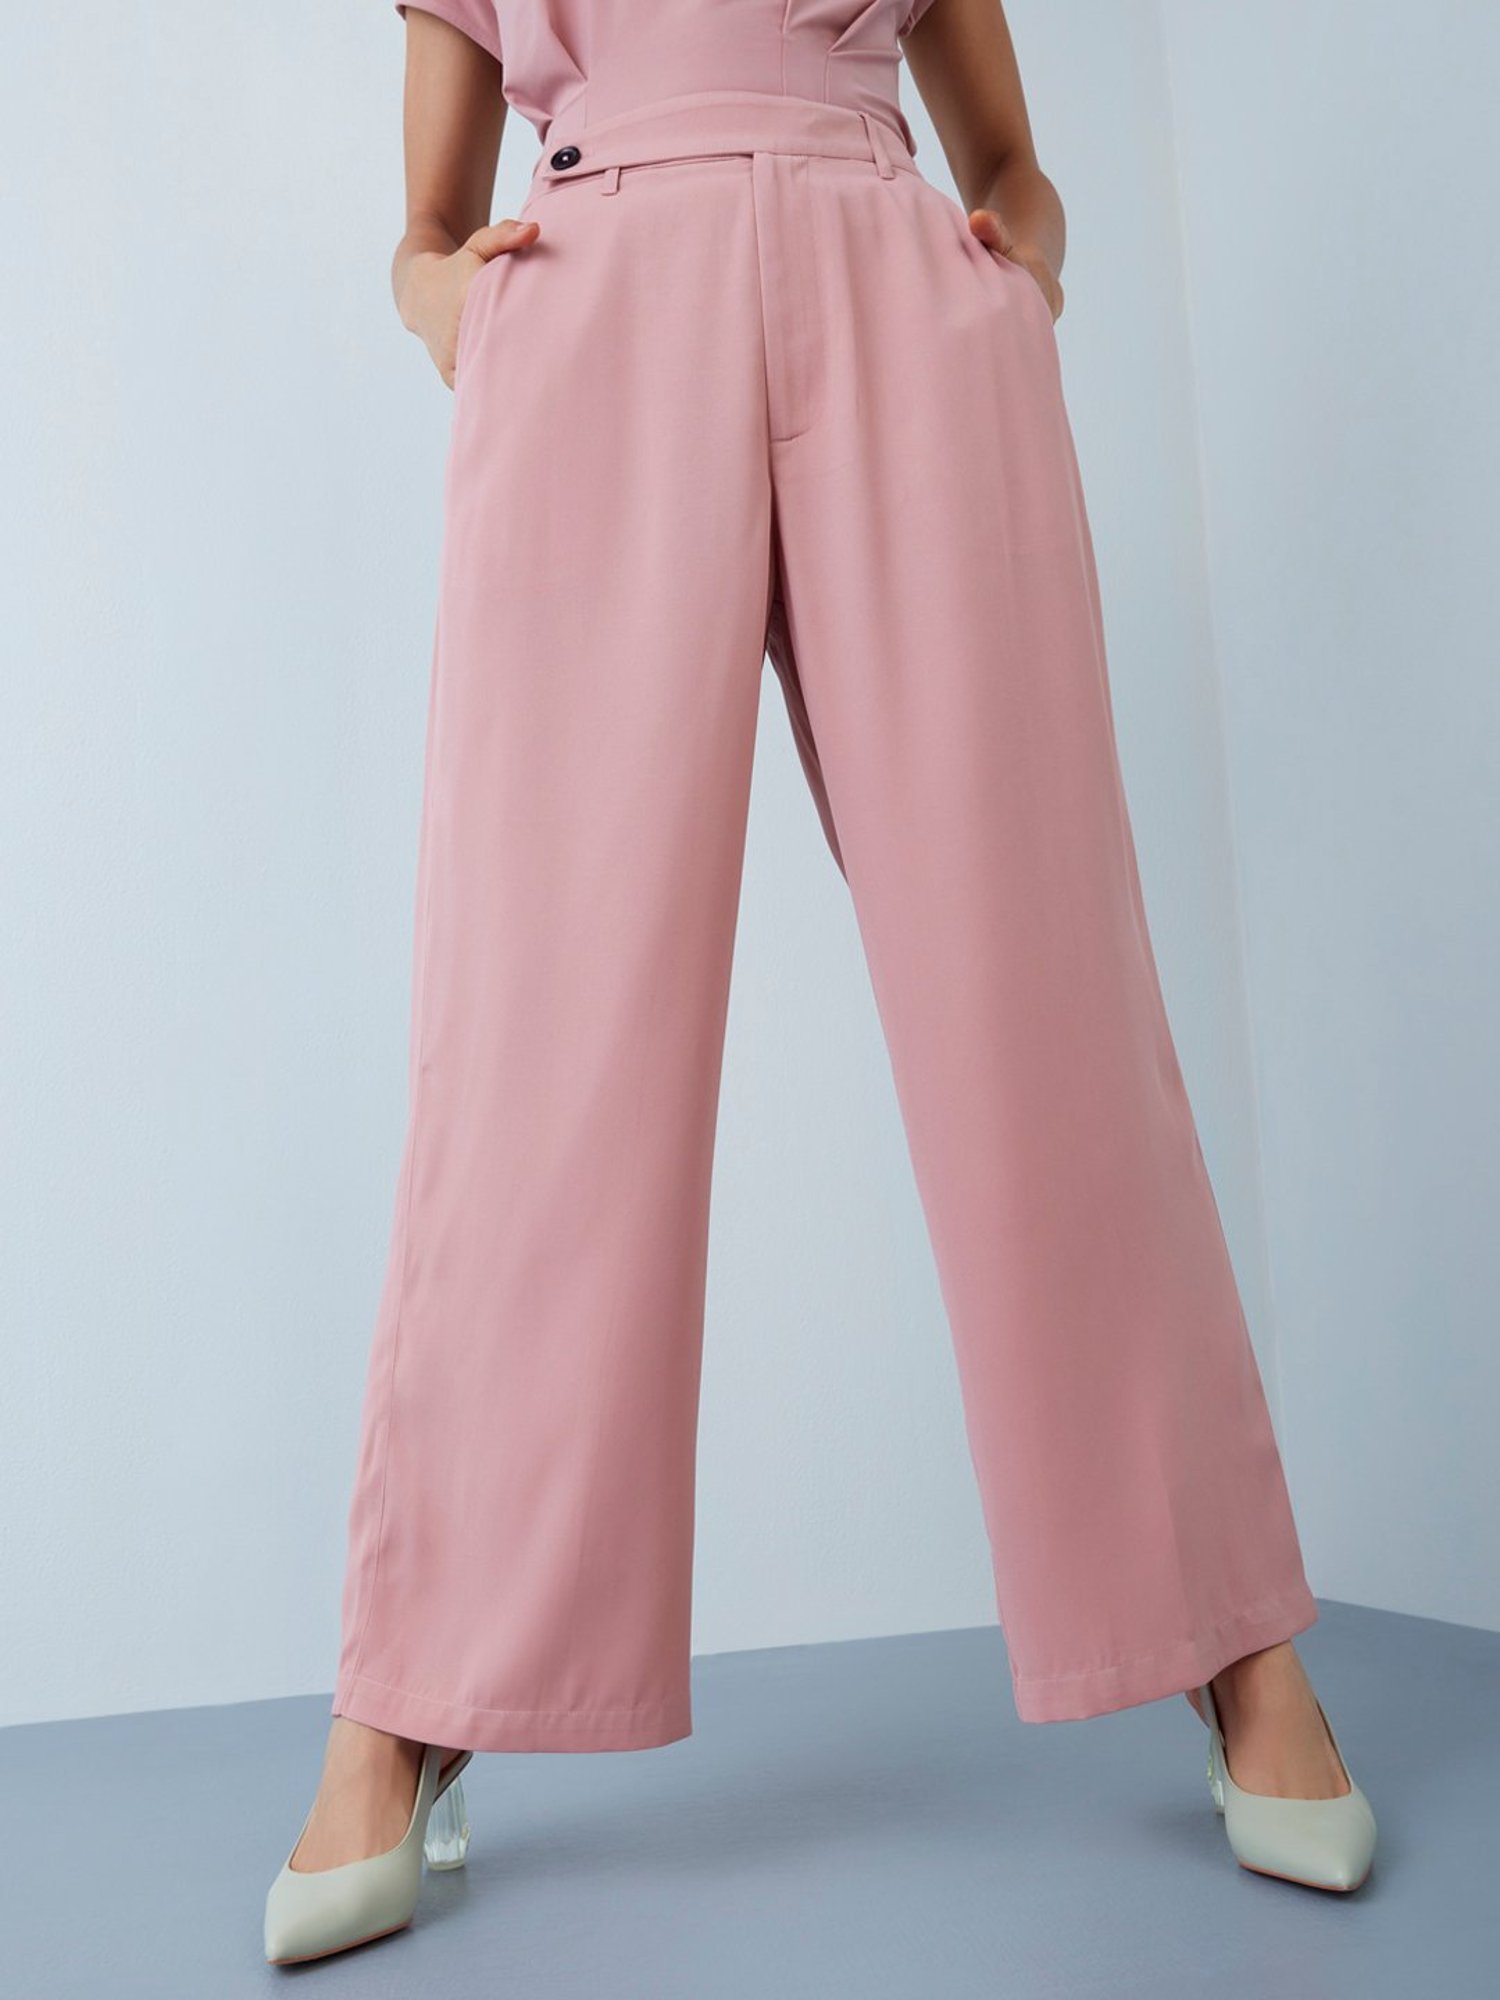 Solid Color Cotton Slub Trouser in Dusty Pink  TJA1715